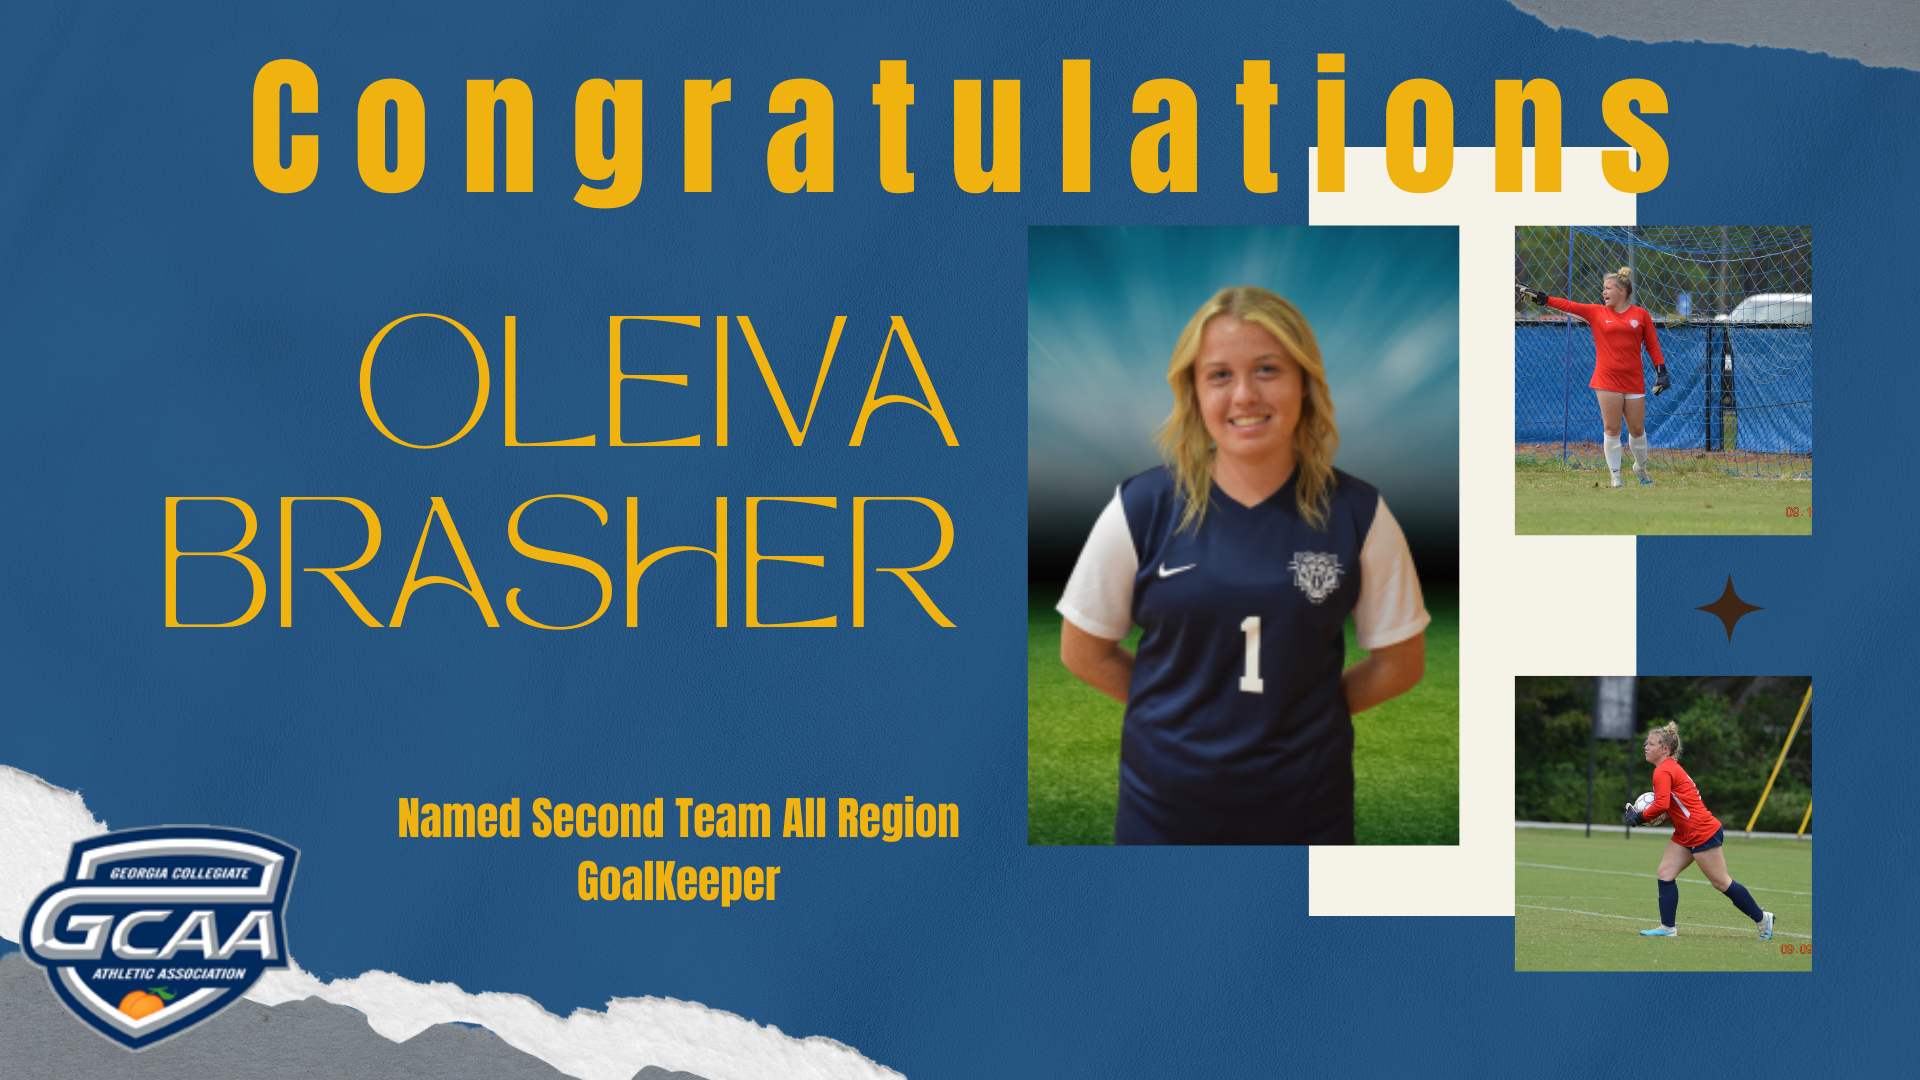 Olevia Brasher: A Rising Star in Cuthbert, GA, Named to 2nd Team All-Region in Women's Soccer